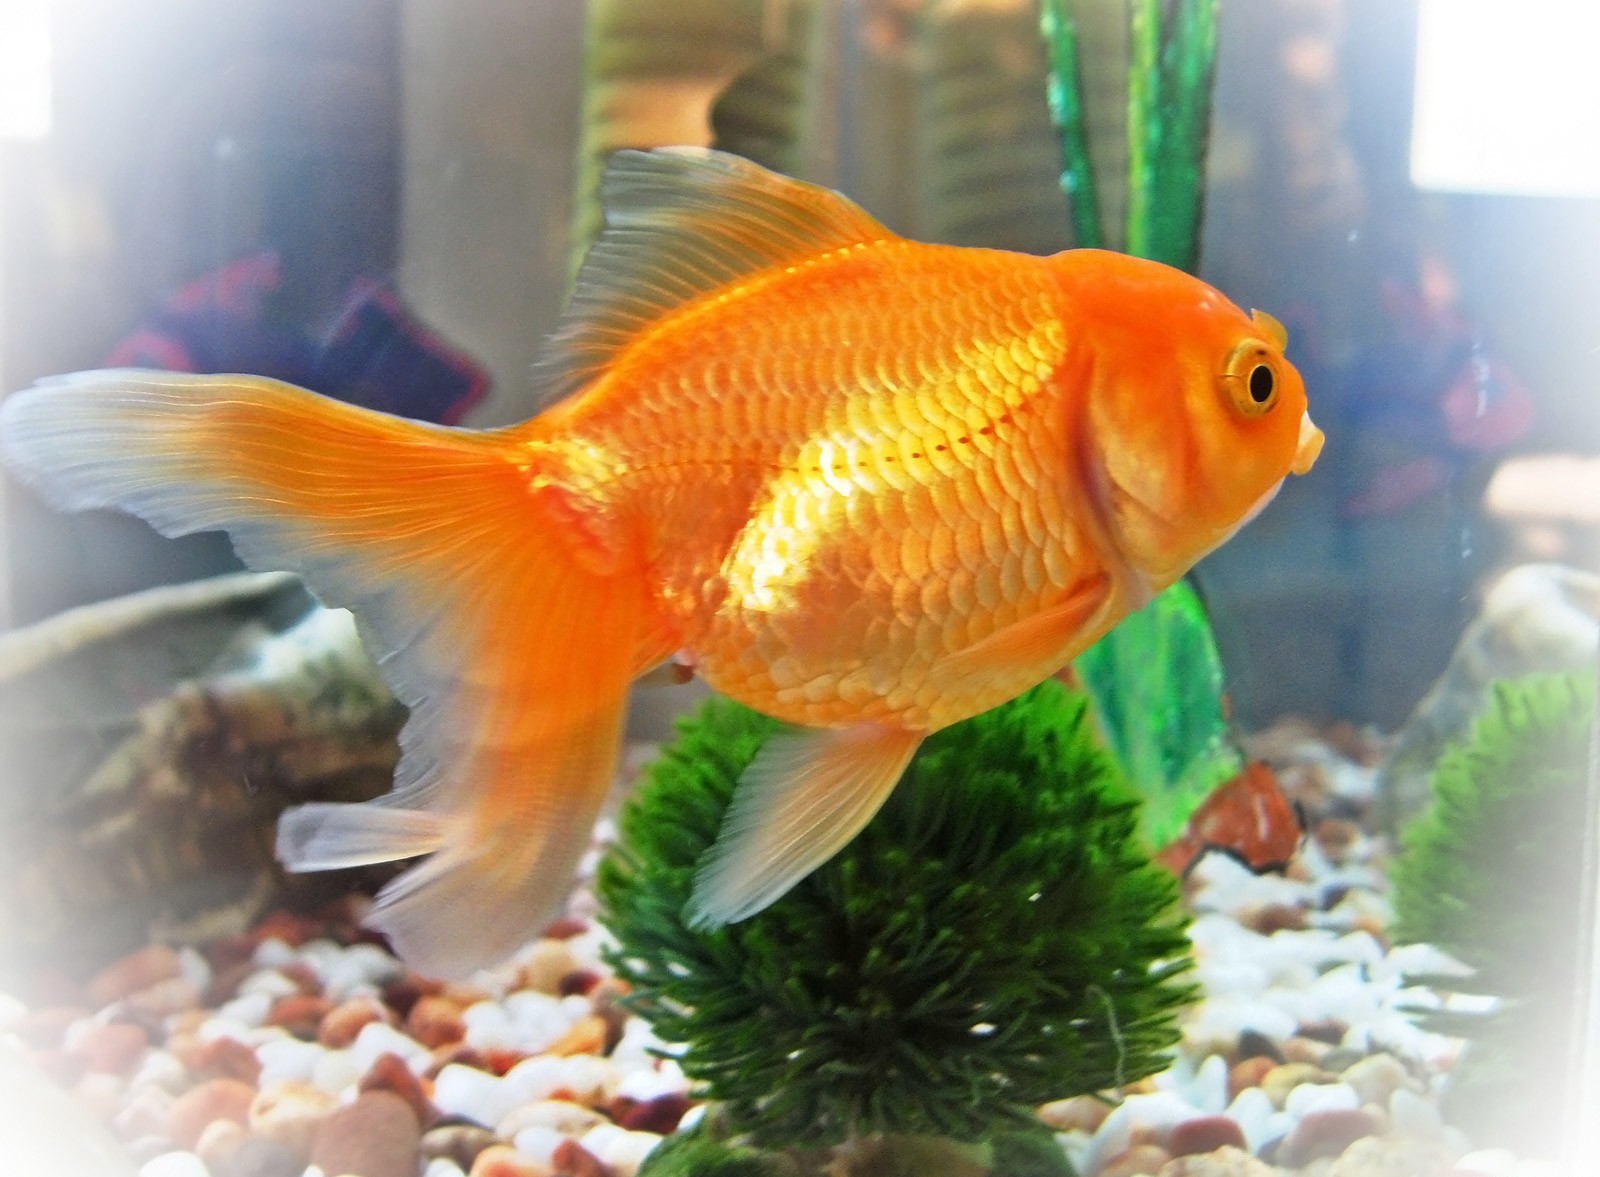 Золотая рыбка правильно. Золотушка рыбка аквариумная. Золотой рибка аквариум. Золотая рыбка большая аквариумная. Золотая рыбка вуалий хвост.